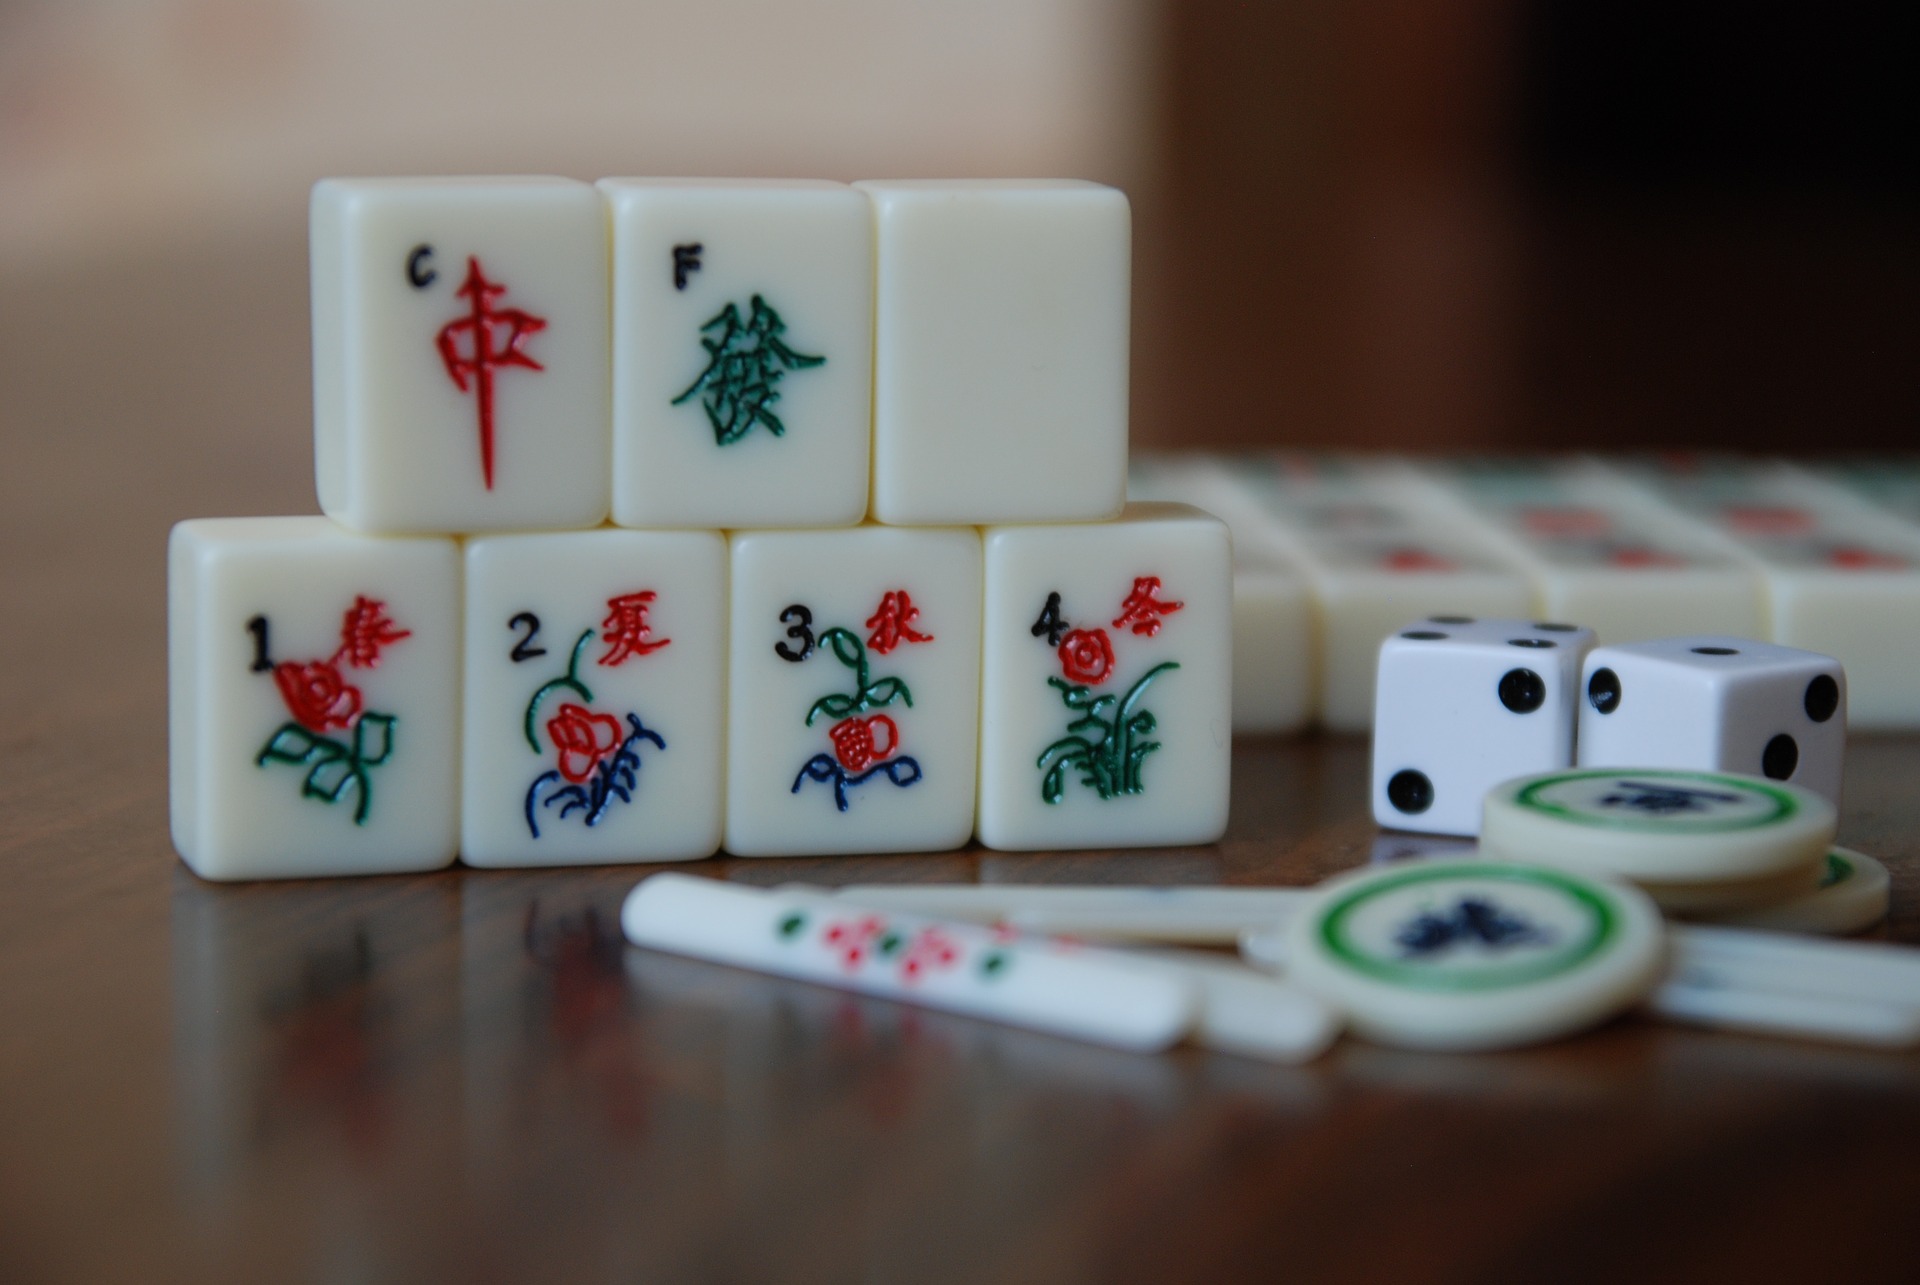 Playing Mahjong, socializing can improve mental health among older Chinese